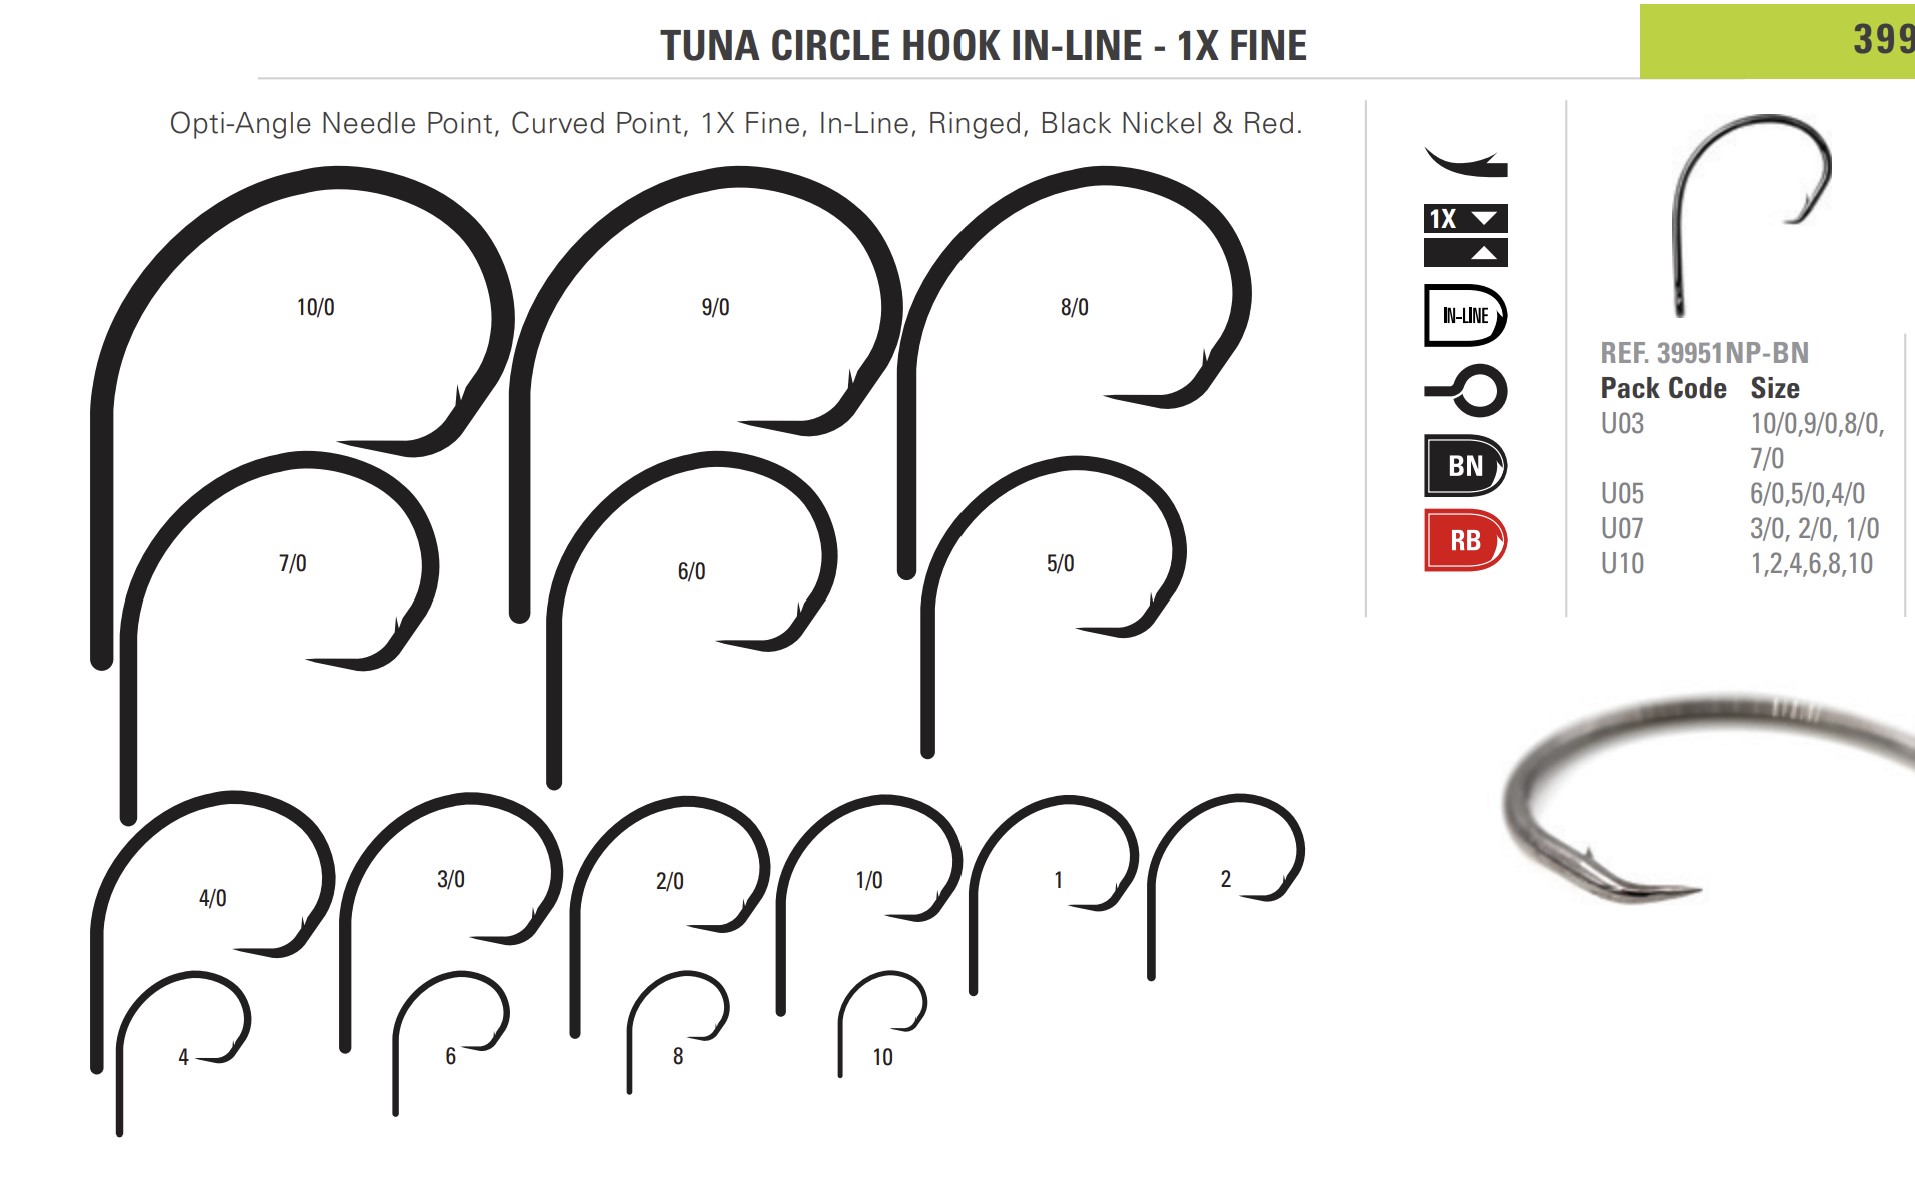 TUNA CIRCLE HOOK IN-LINE - 1X FINE MUSTAD